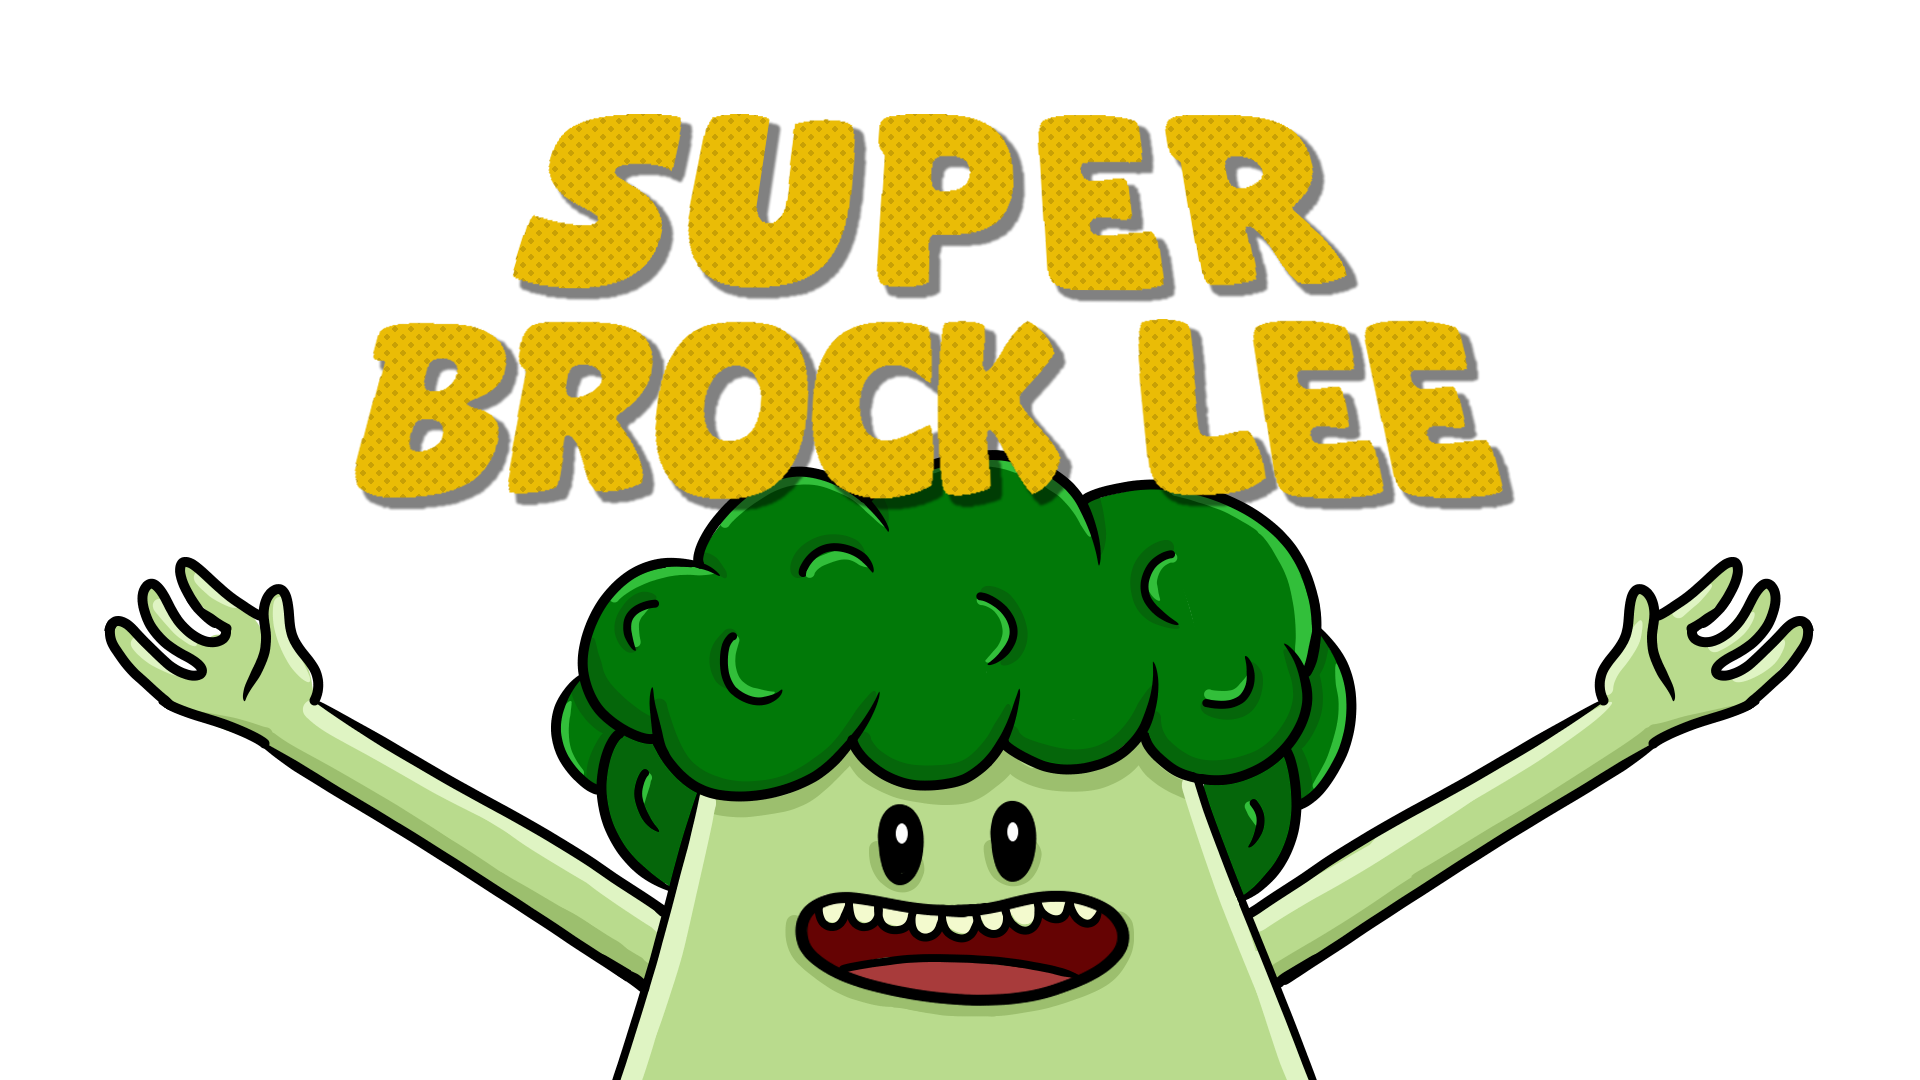 Super Brock Lee